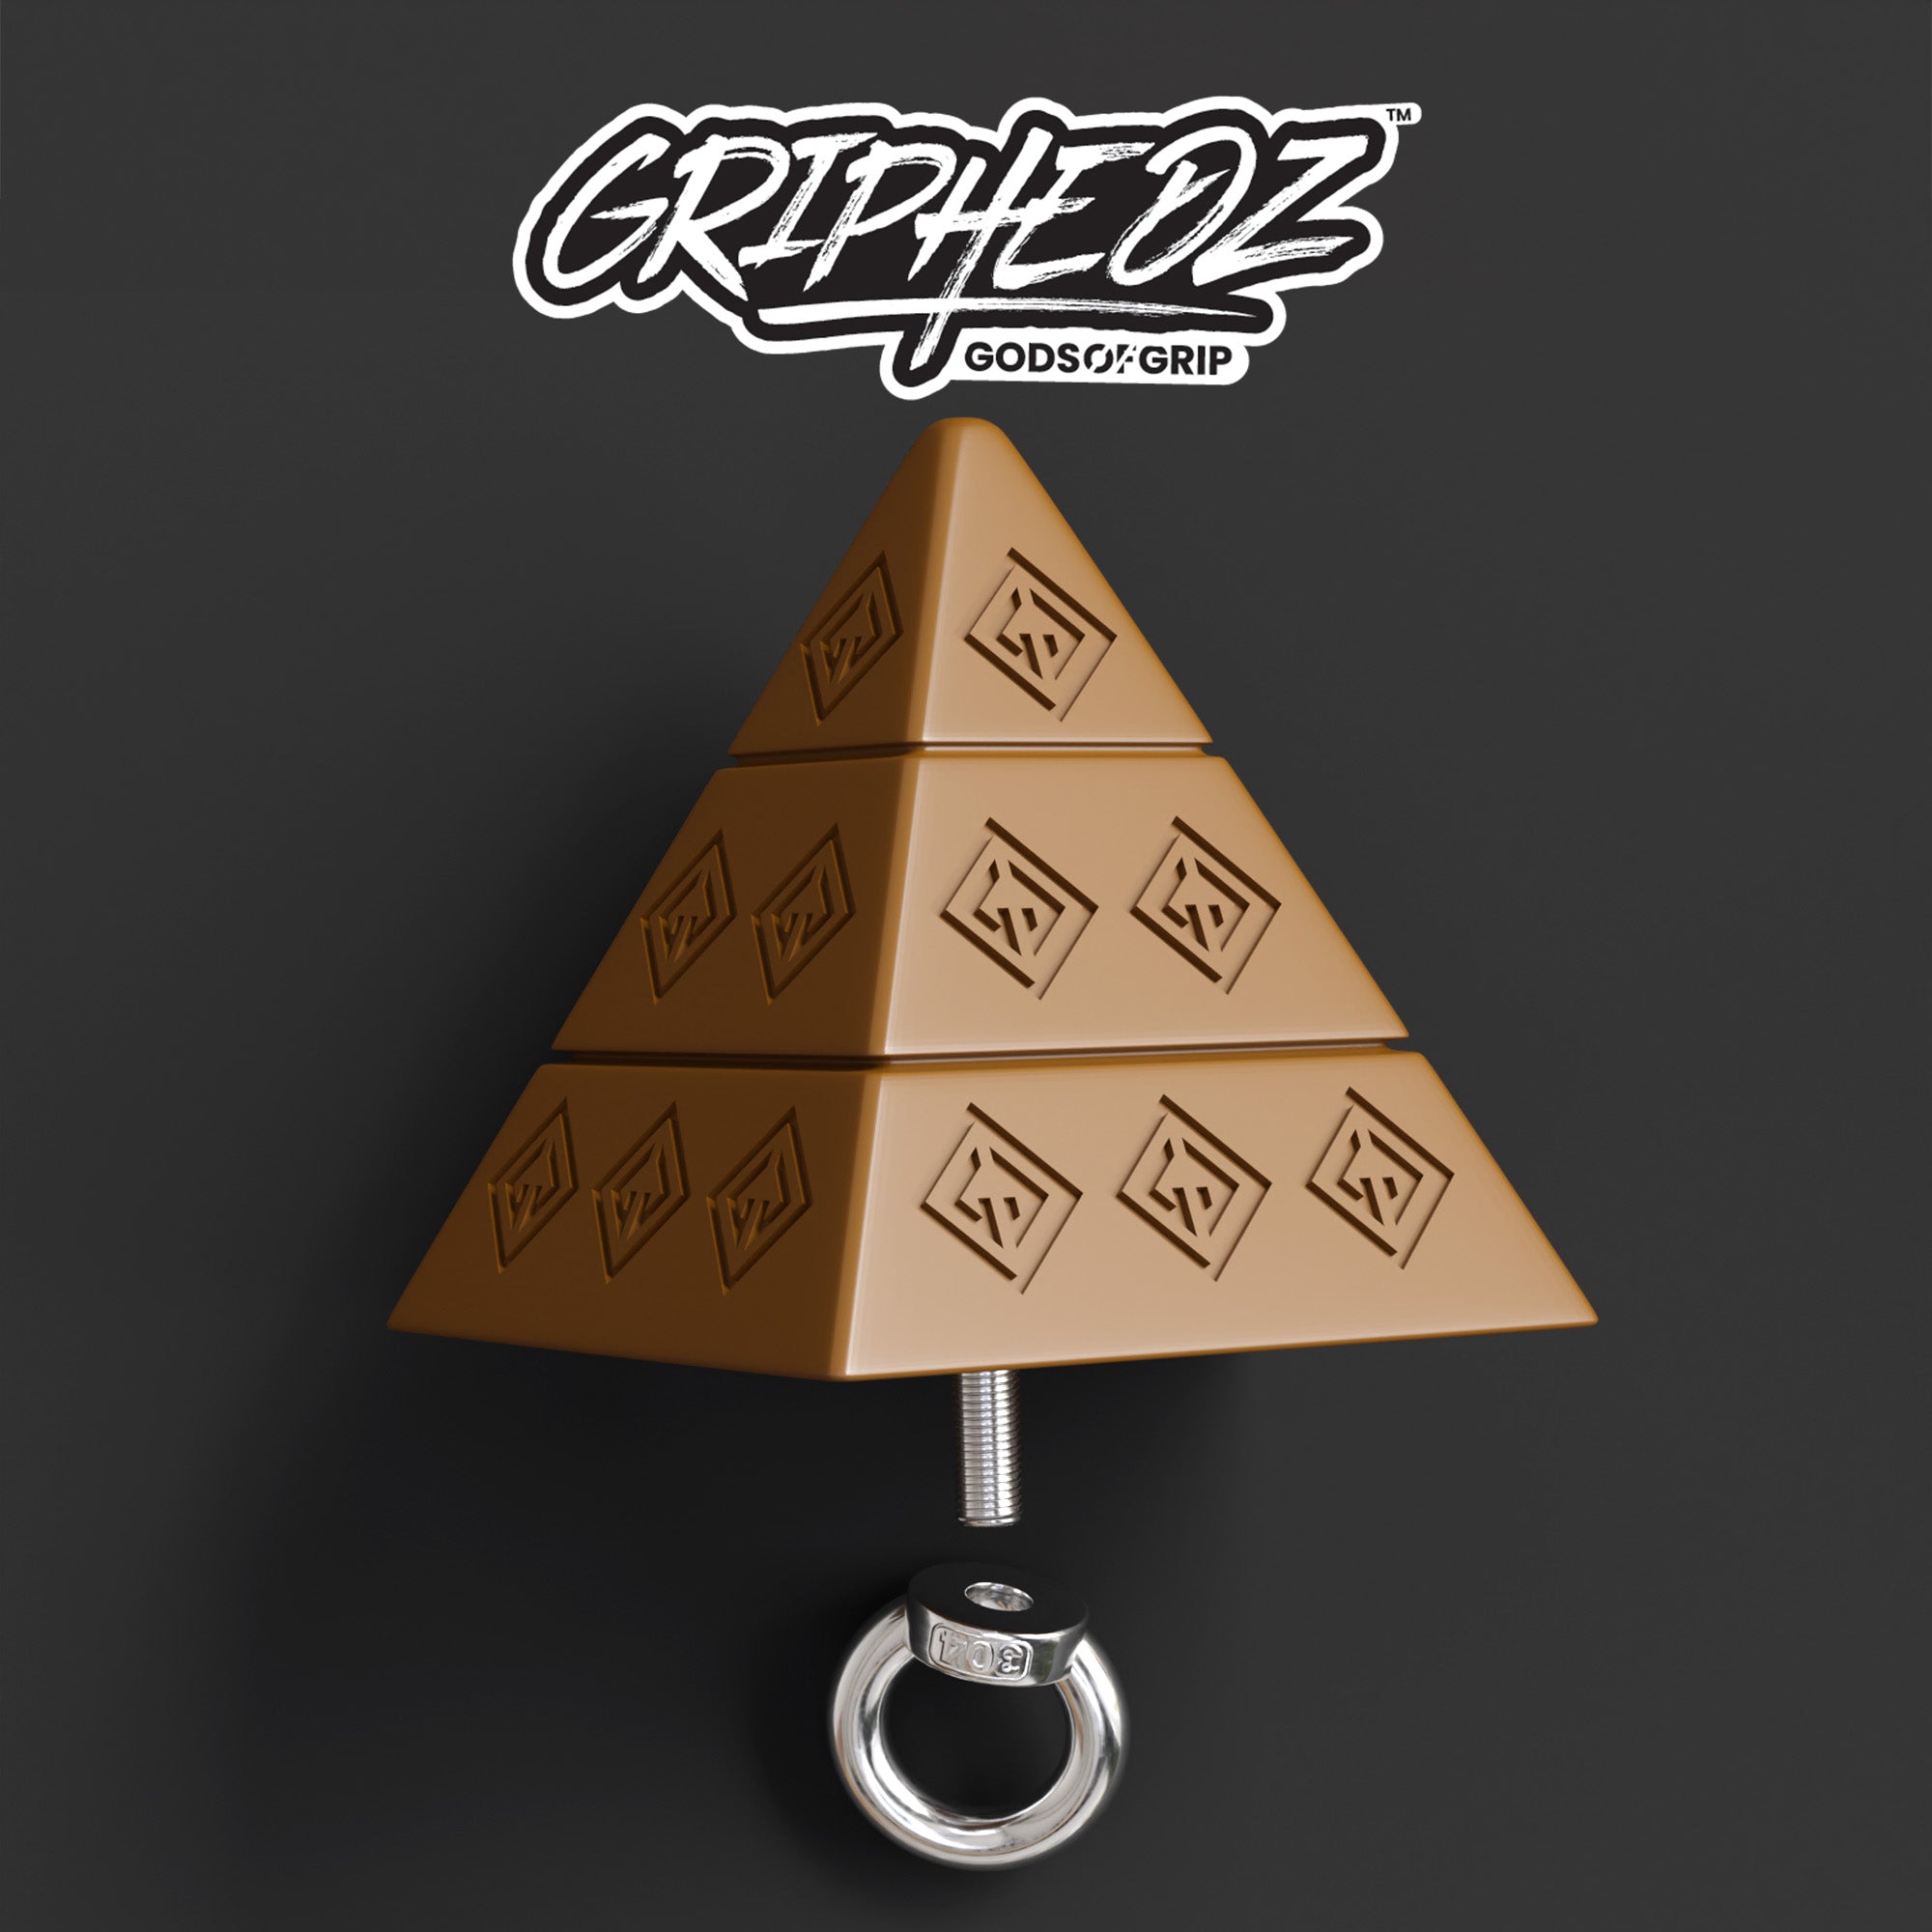 Griphedz™ - Great GOG Pyramid Main